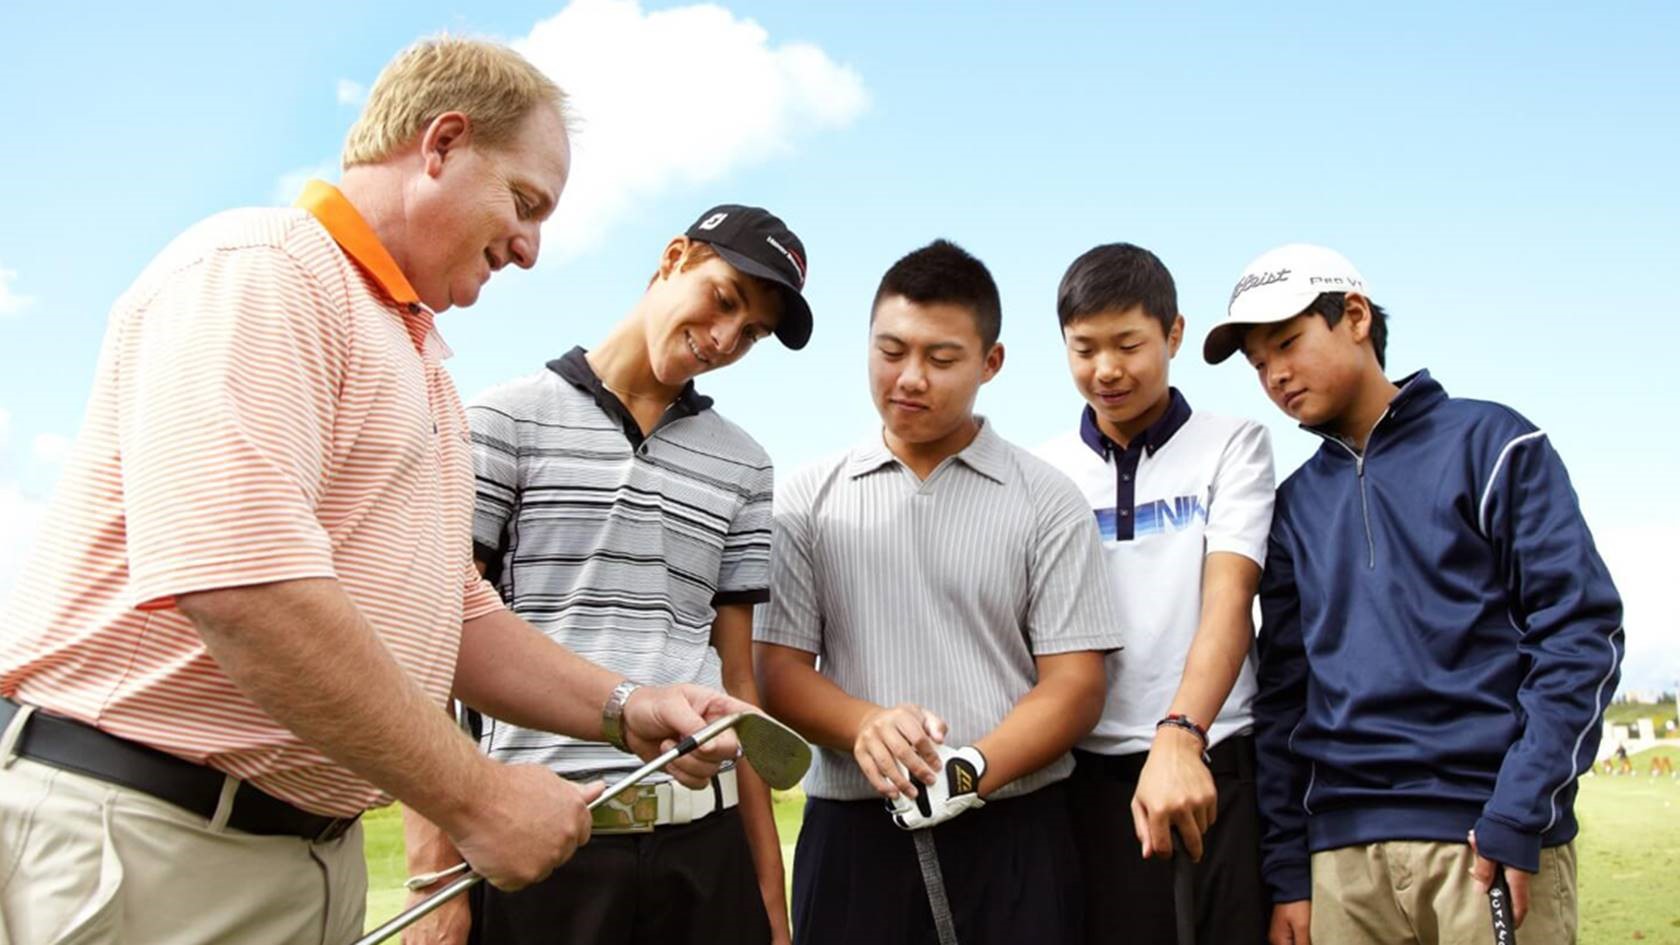 Aspiring golfers to take aim at the GenNXT Golf Academy in Scottsdale